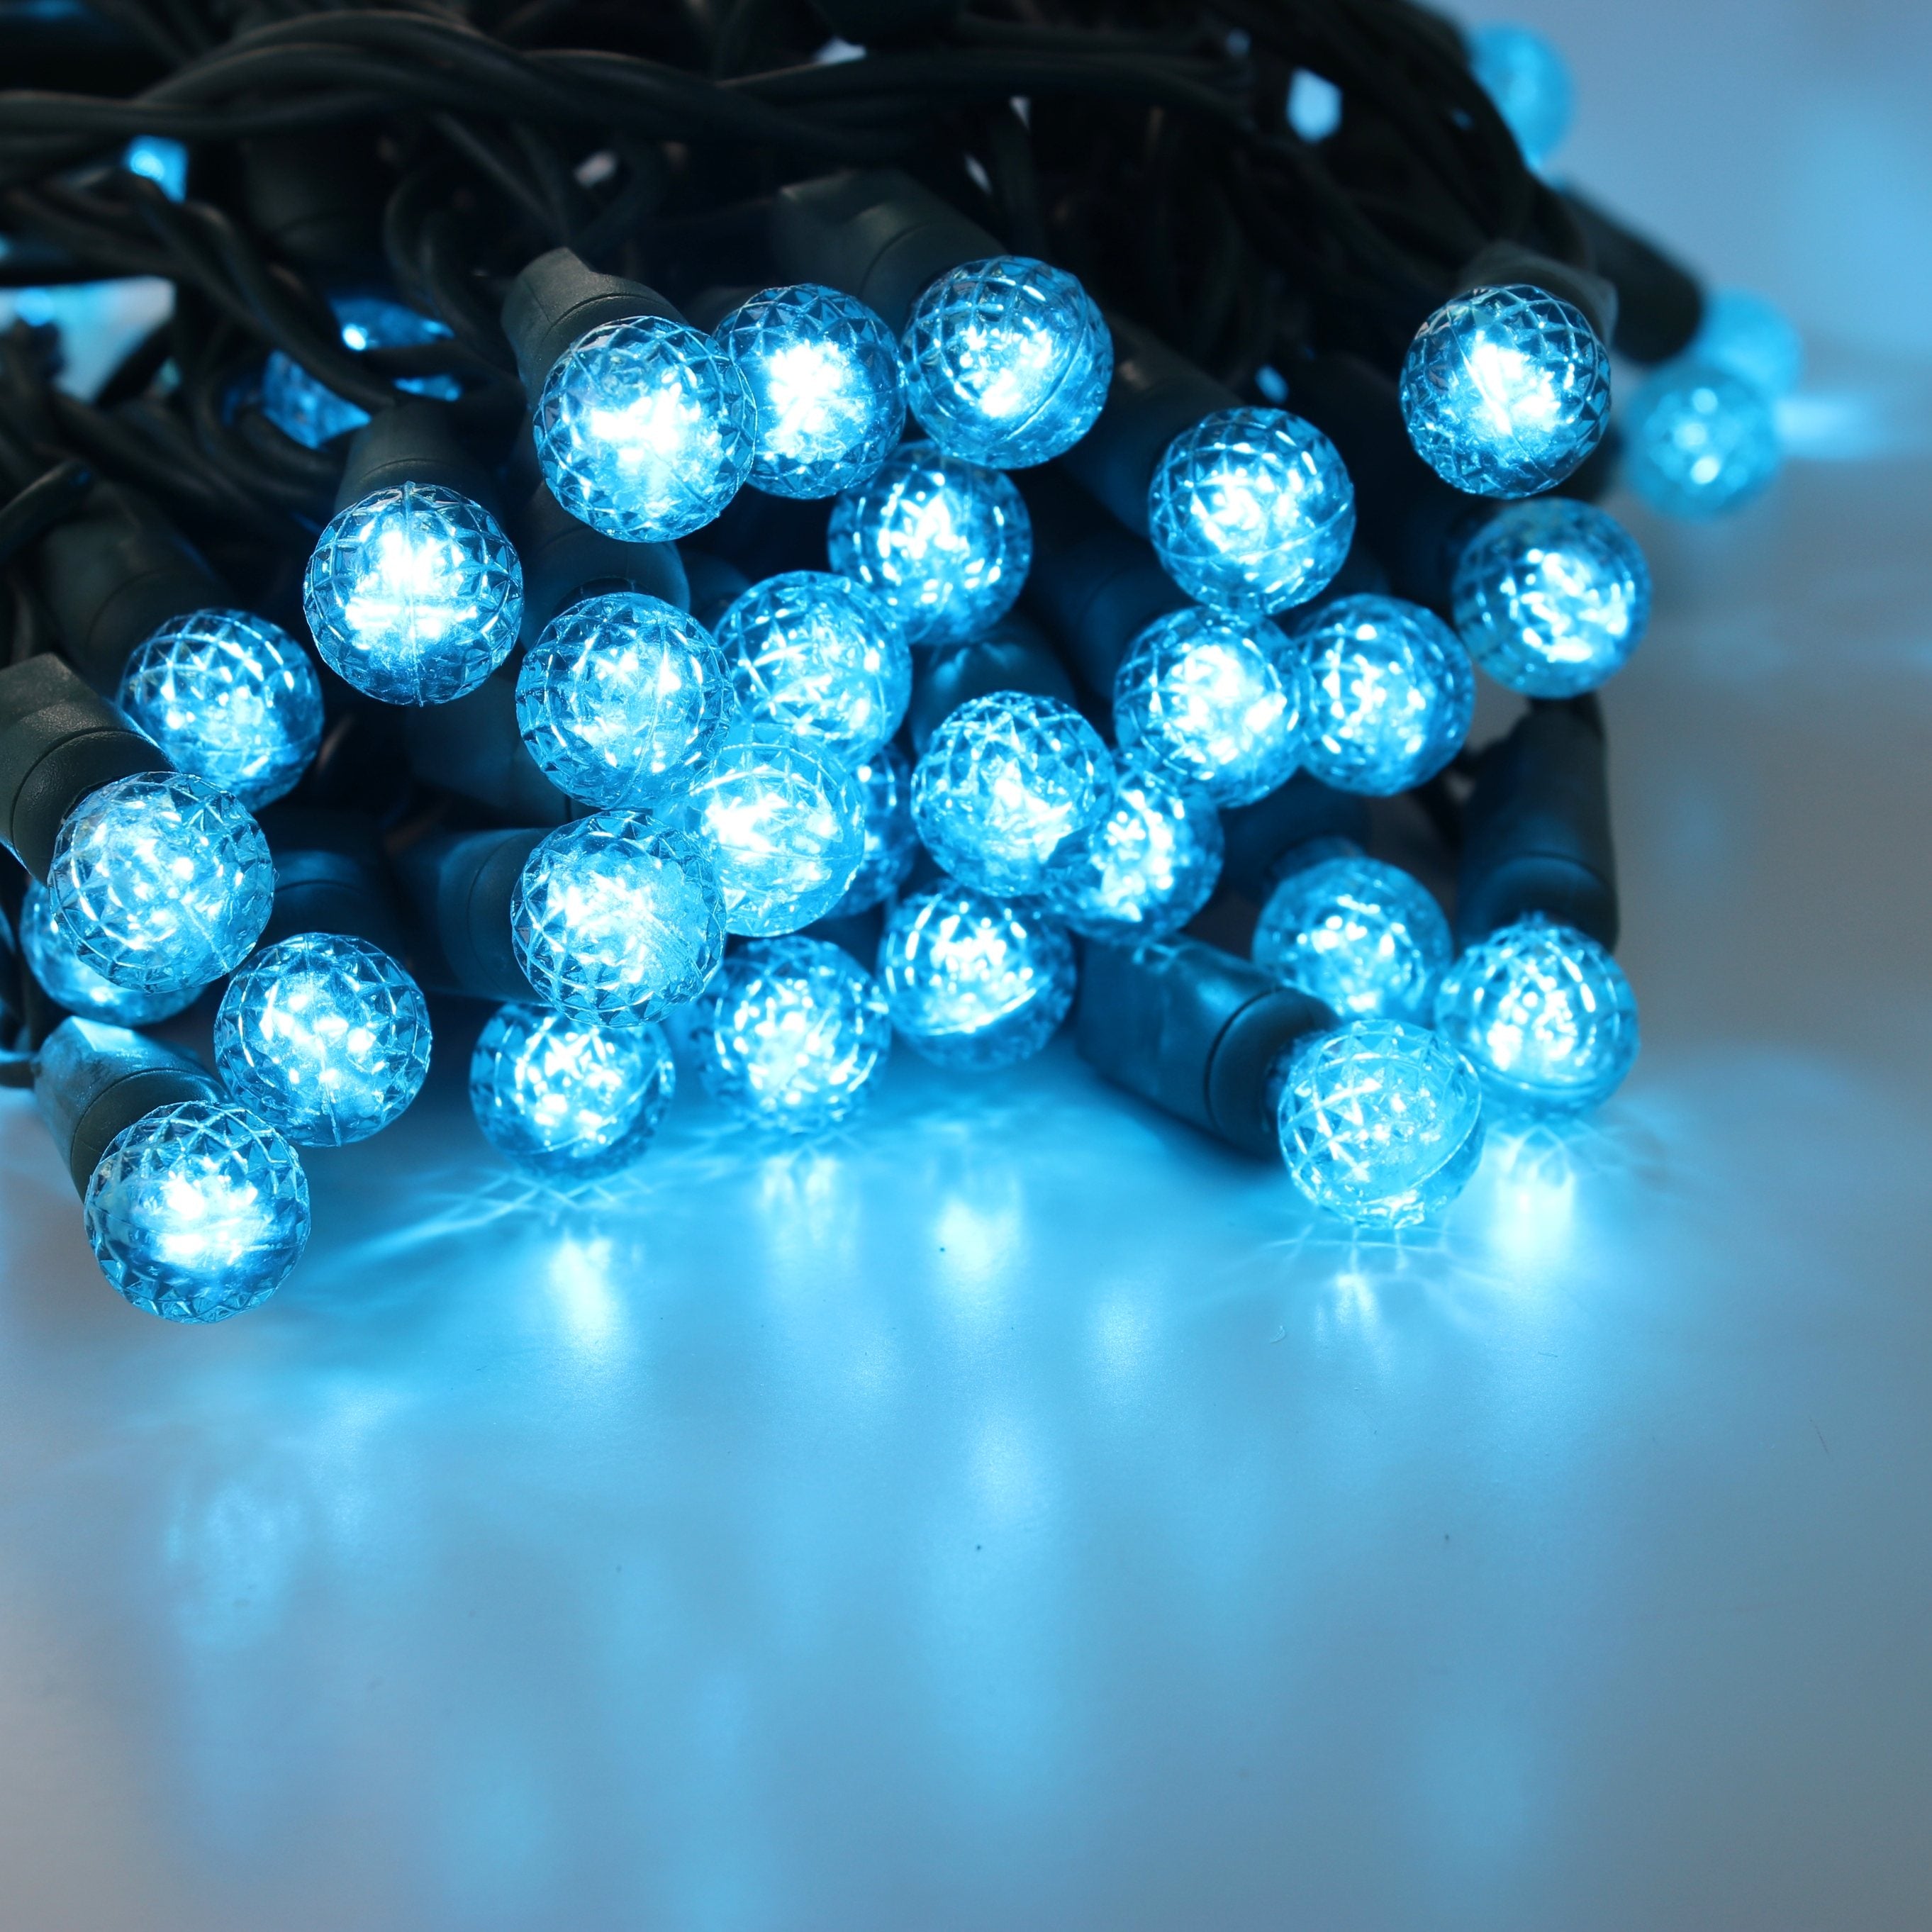 Decorative light bulbs | Solar G40 fancy outdoor string led lights